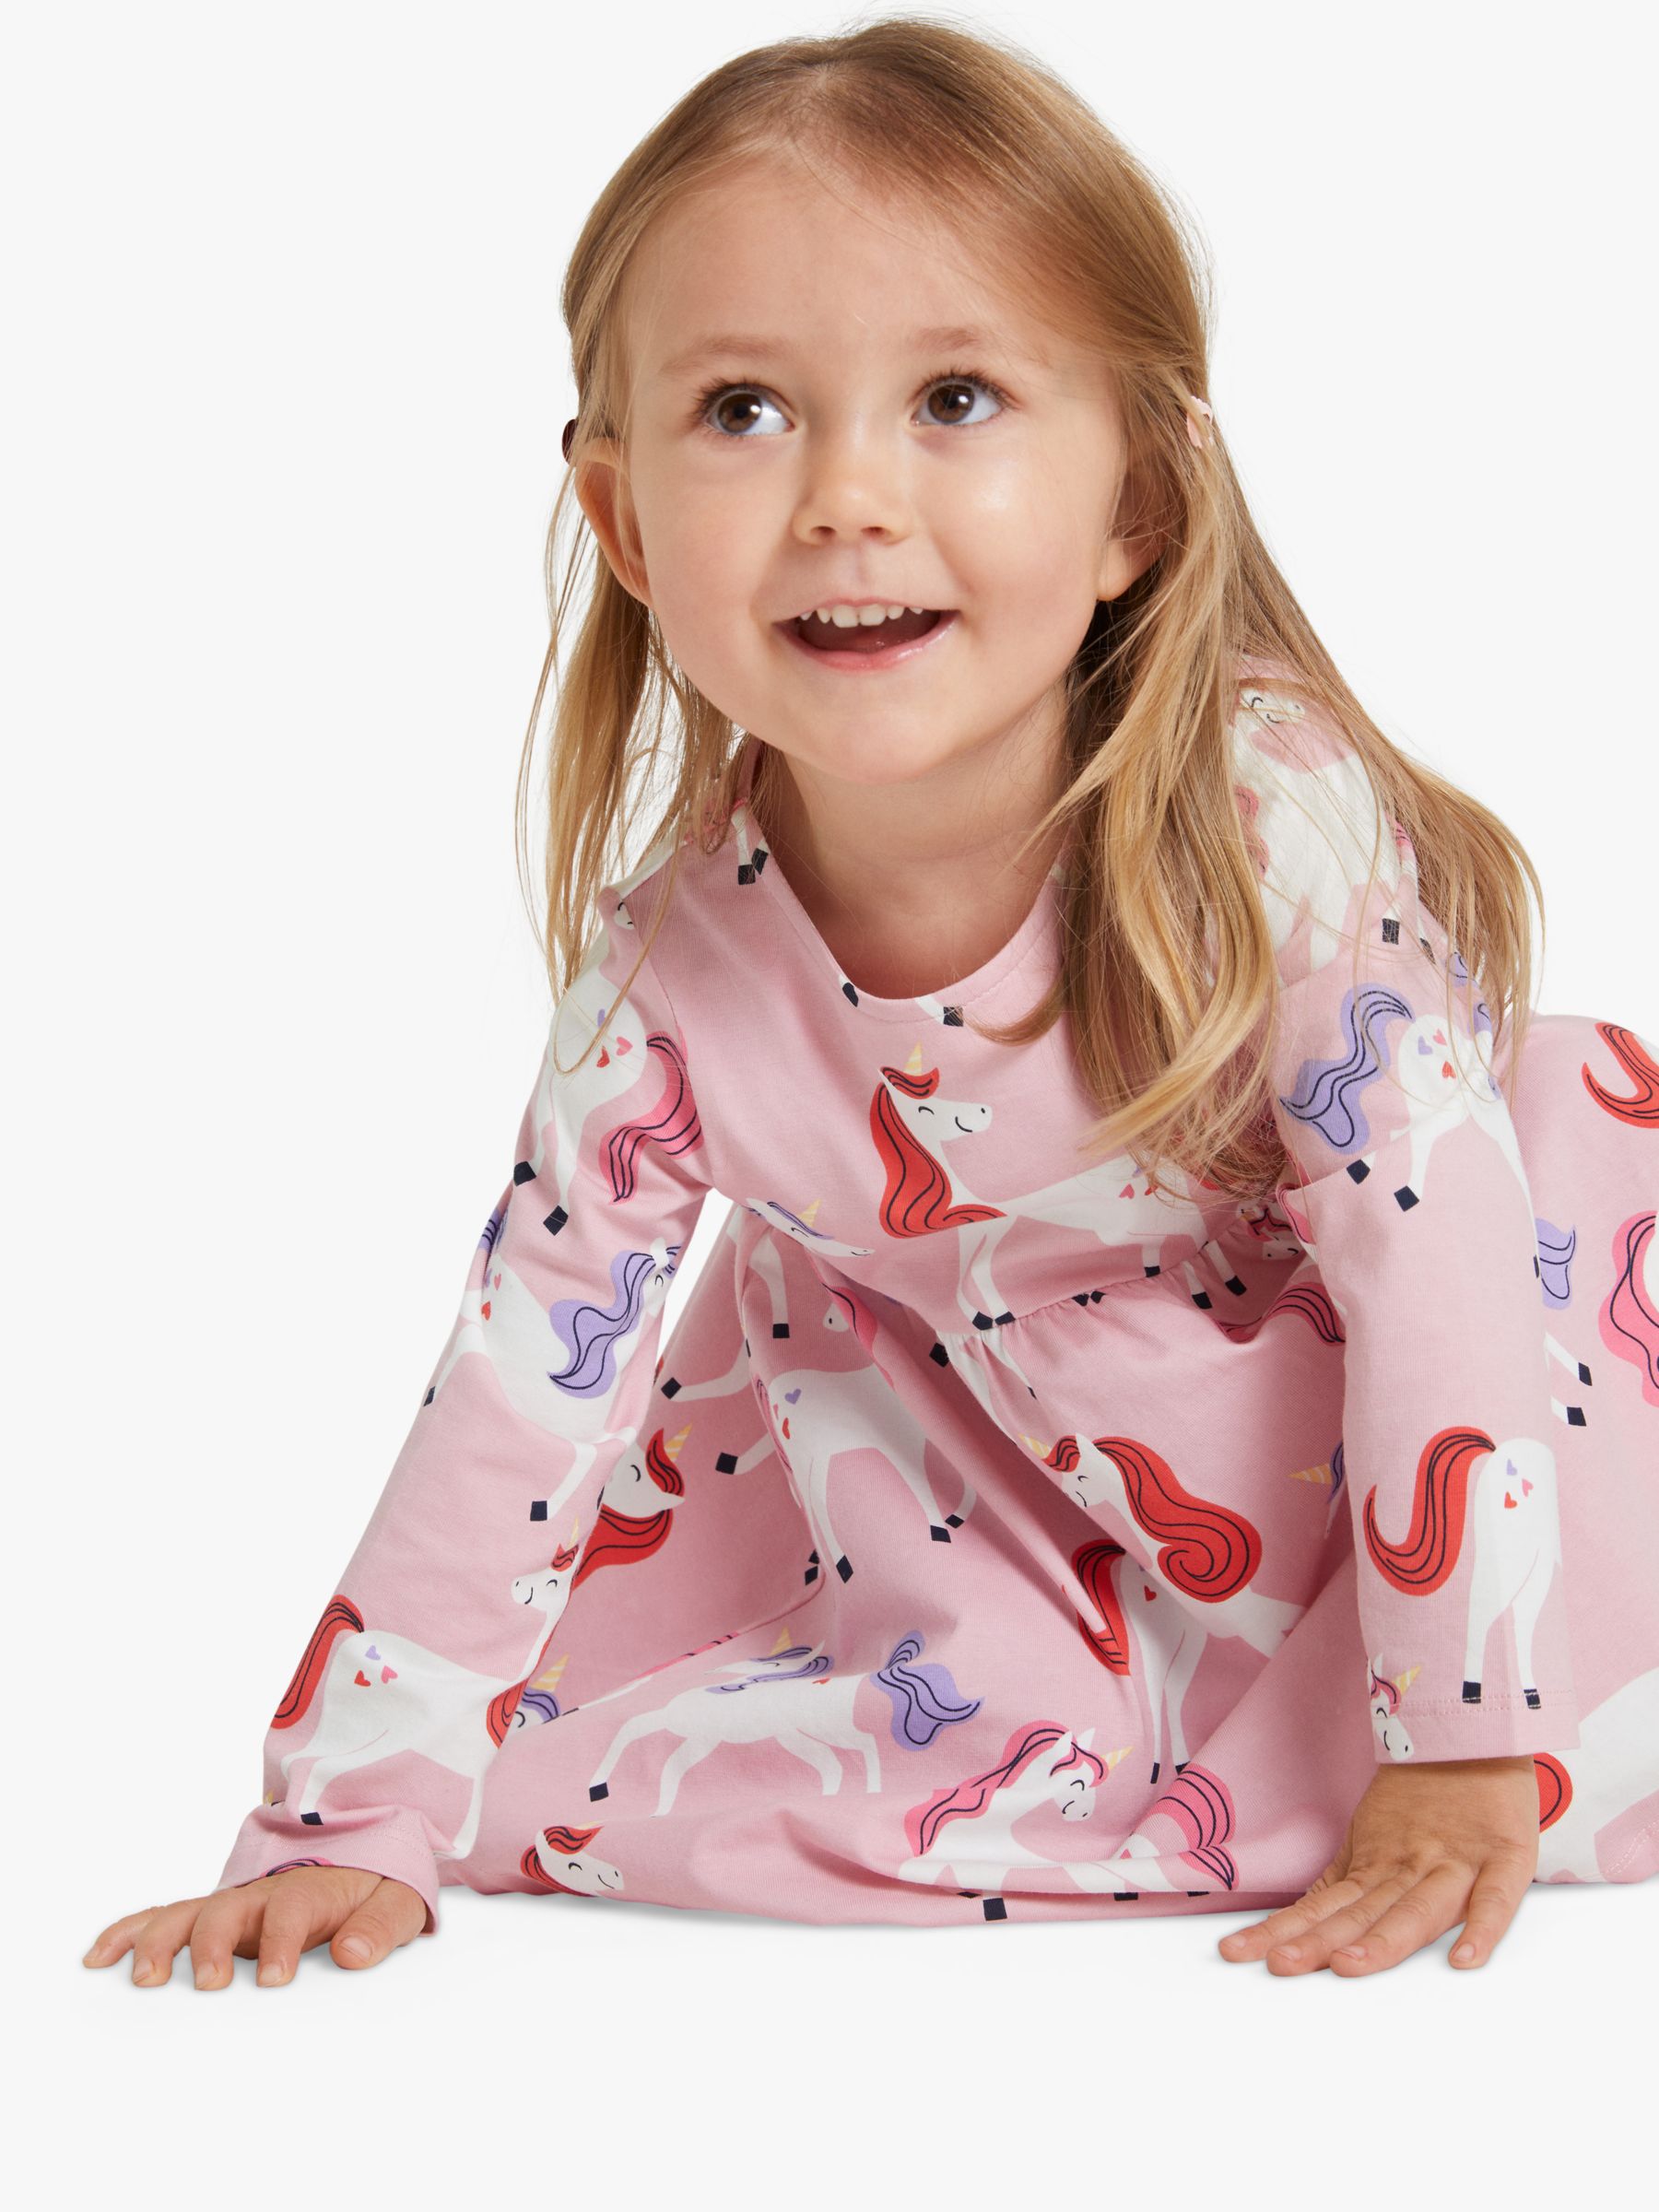 Polarn O. Pyret Kids' Organic Cotton Unicorn Print Dress, Pink, 12-18 months